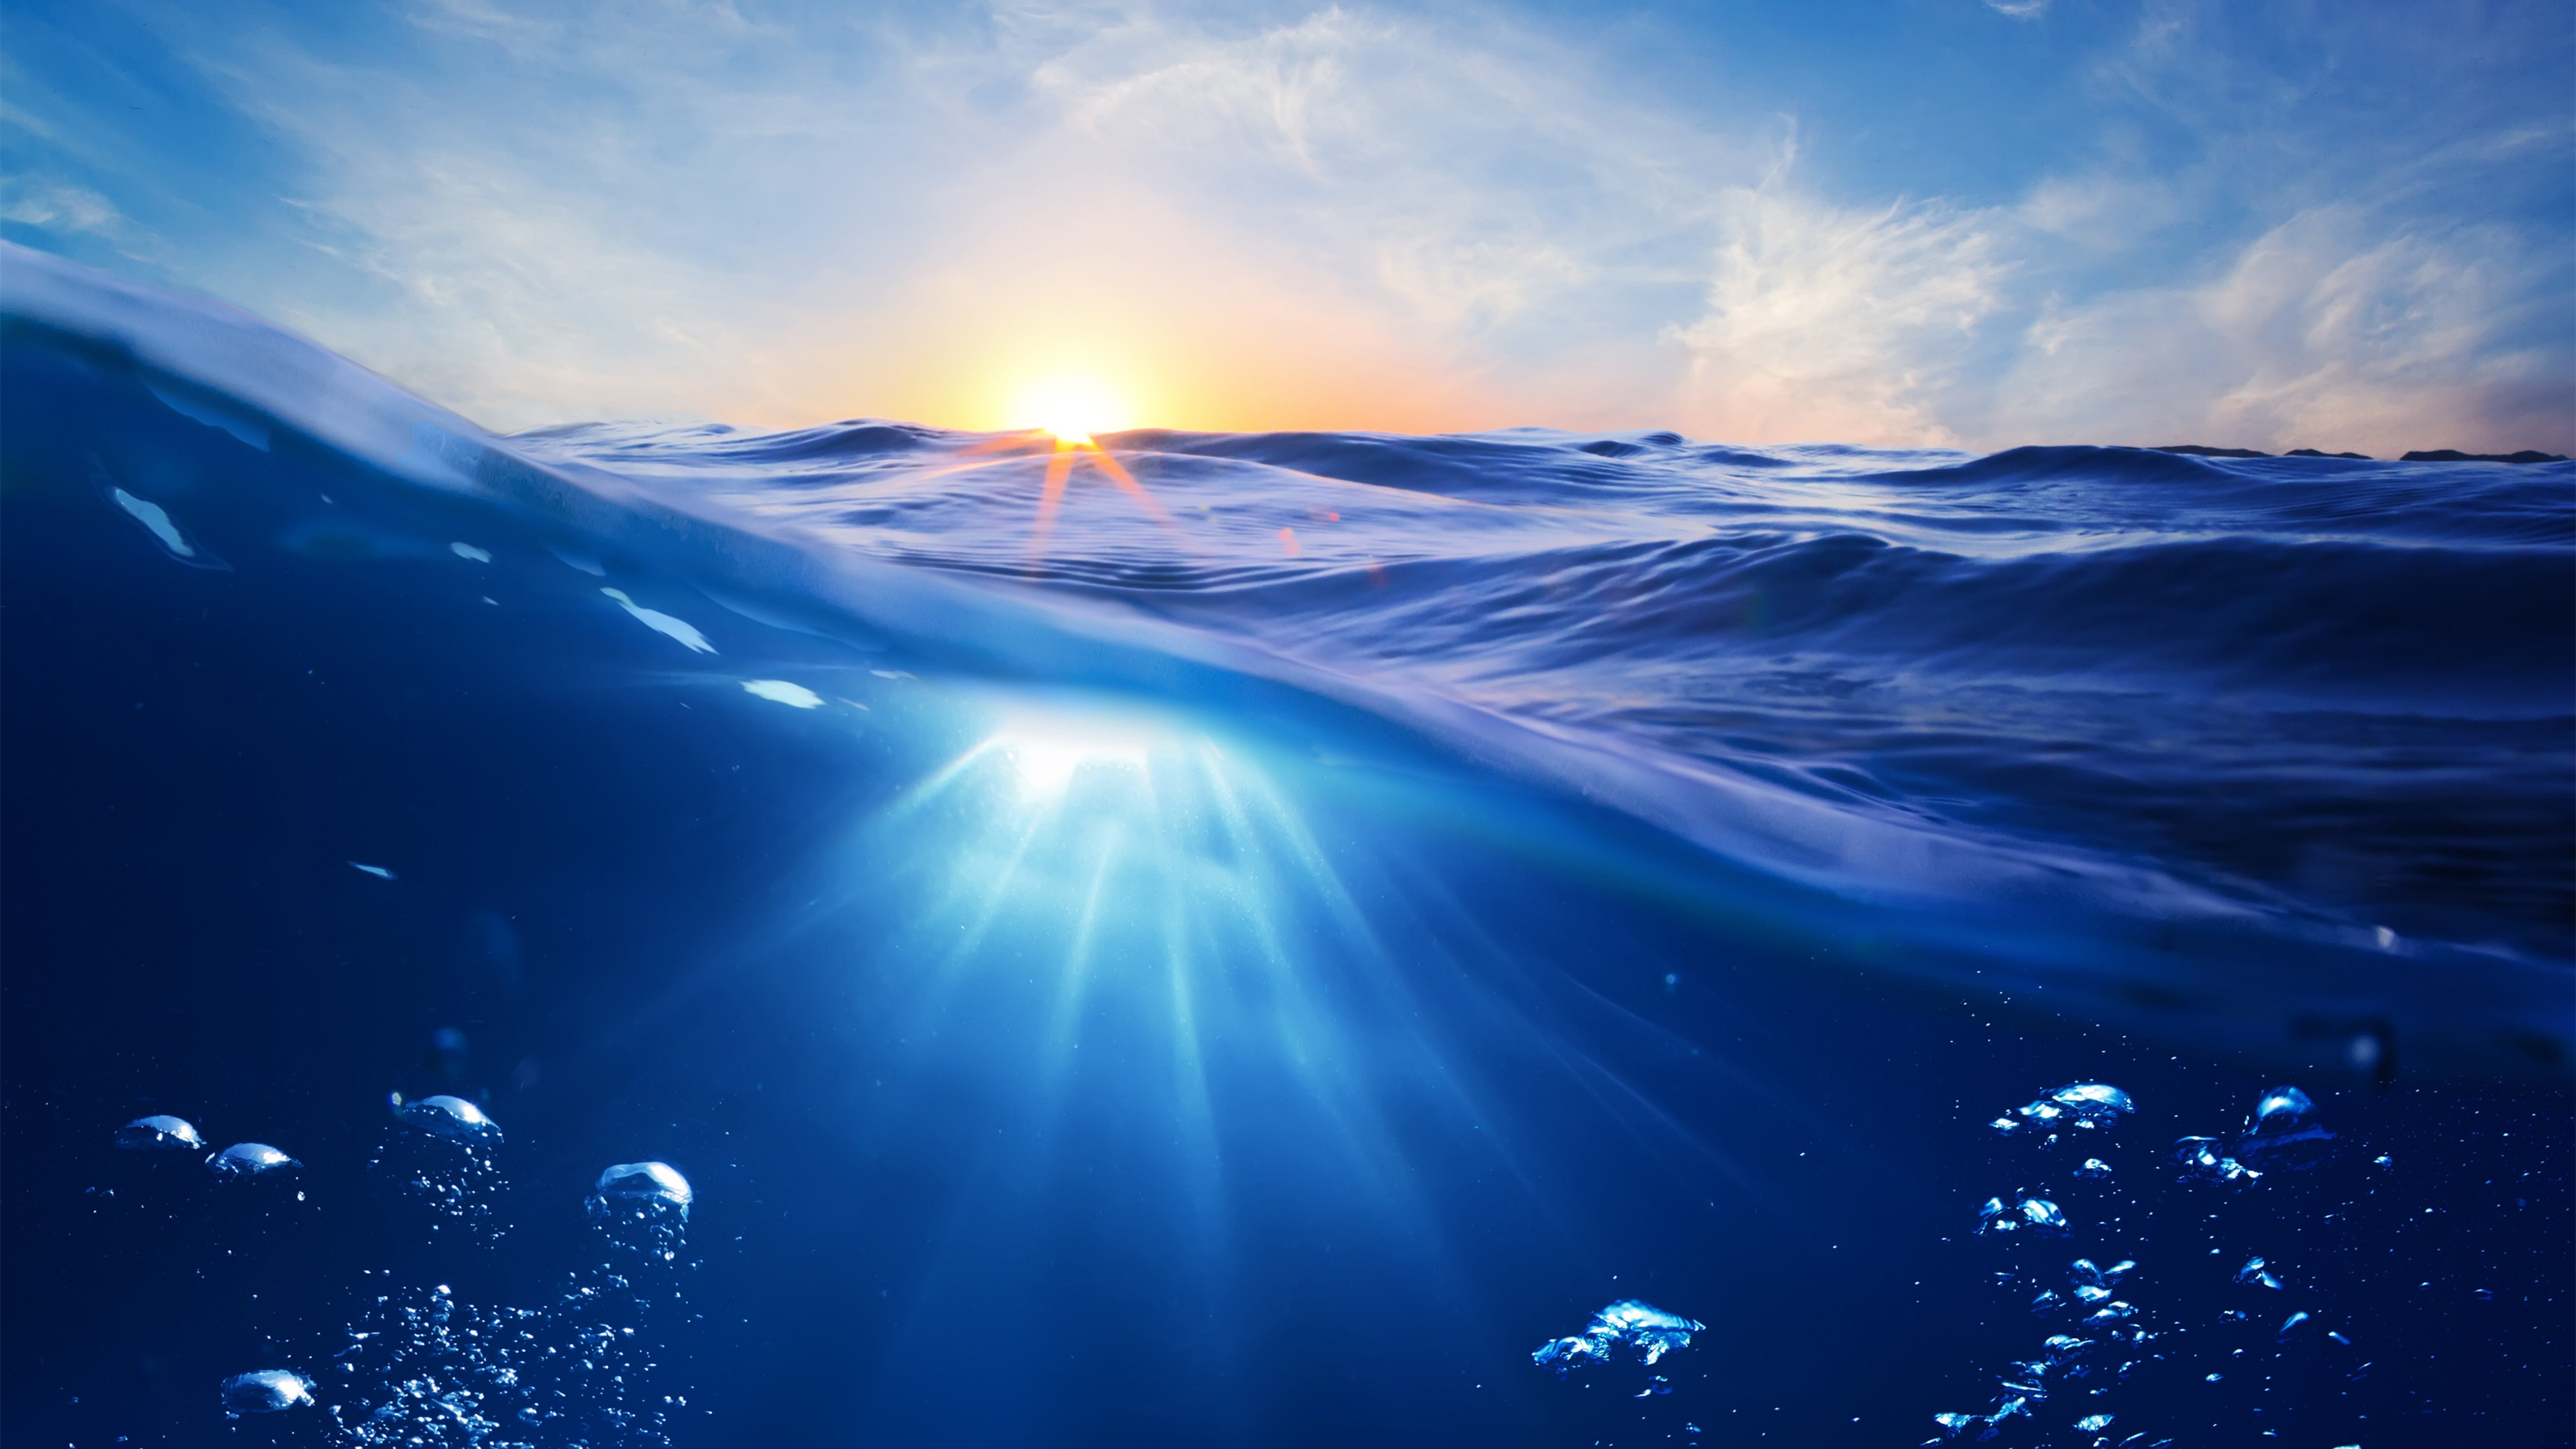 Ocean, 5k, 4k Wallpaper, 8k, Sea, Nature, Underwater, - Water 4k Background - HD Wallpaper 